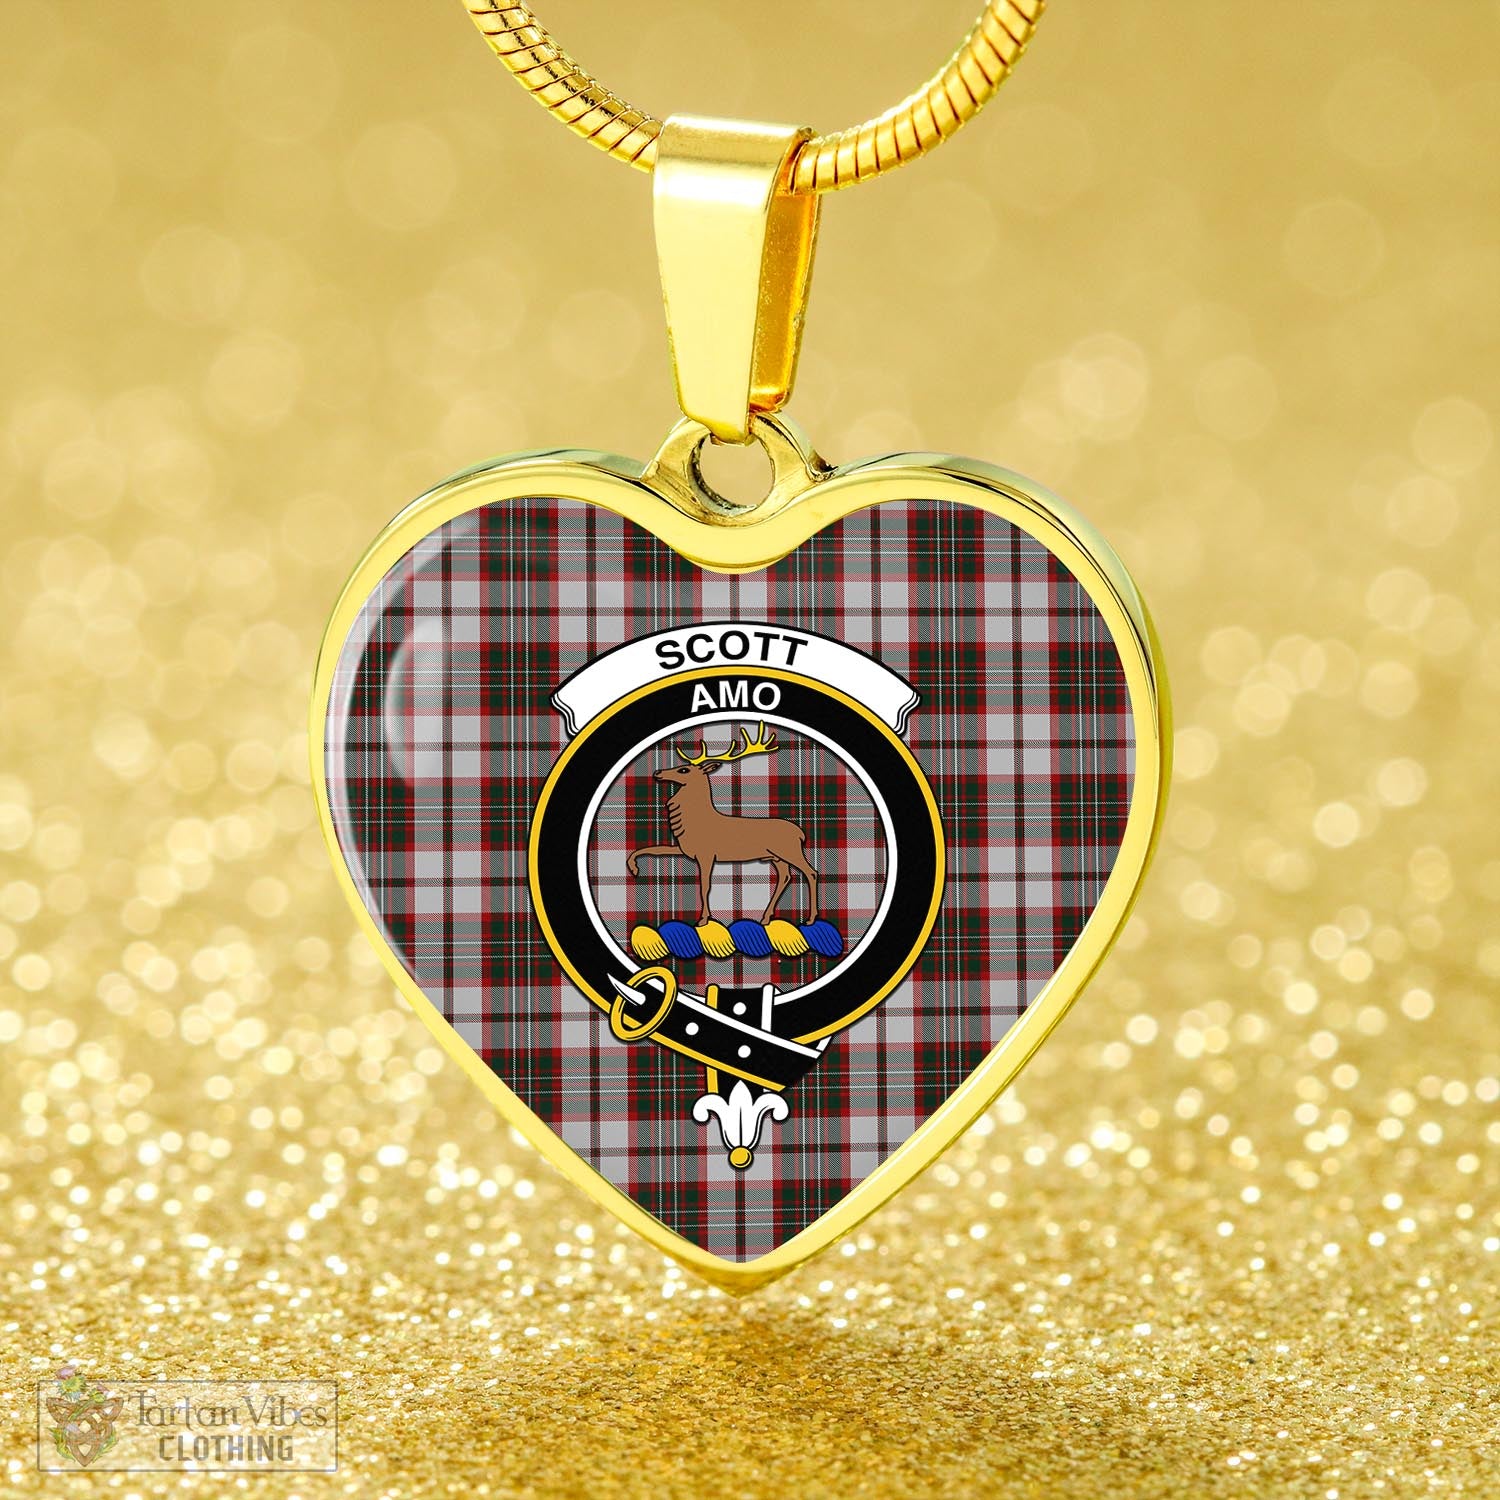 Tartan Vibes Clothing Scott Dress Tartan Heart Necklace with Family Crest